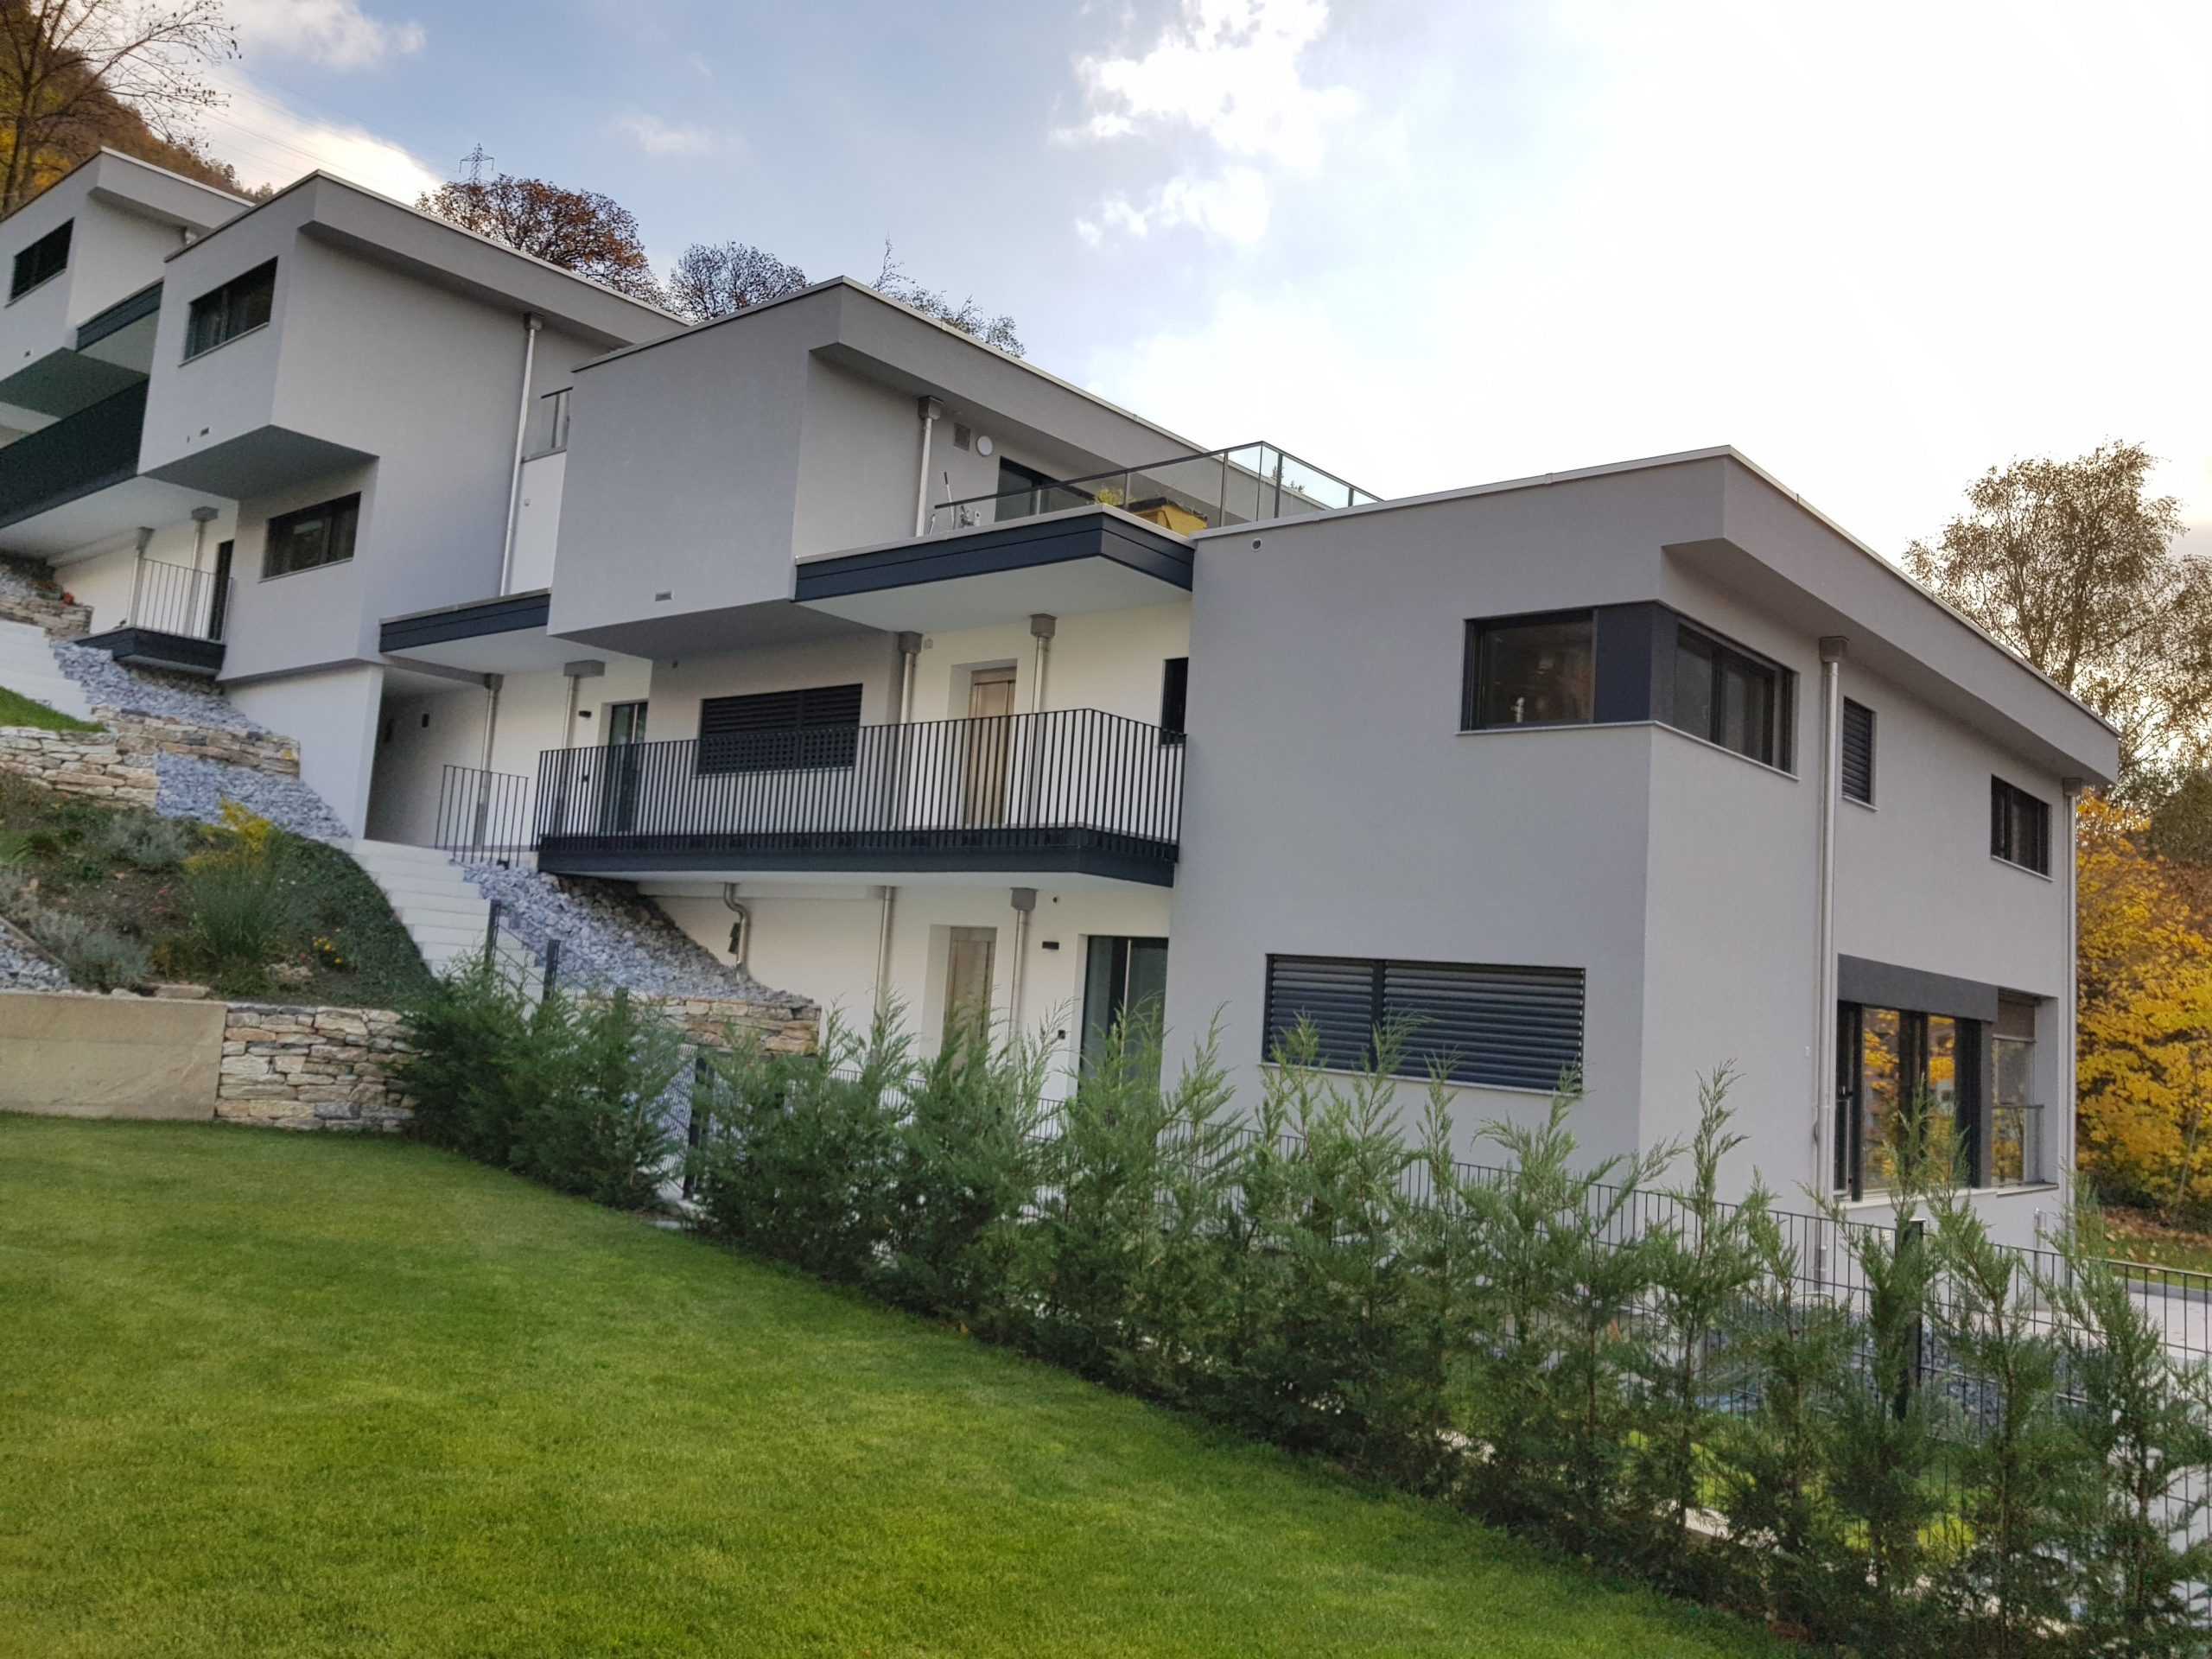 4 Reiheneinfamilienhäuser La Terrazza  2019/2020Visp